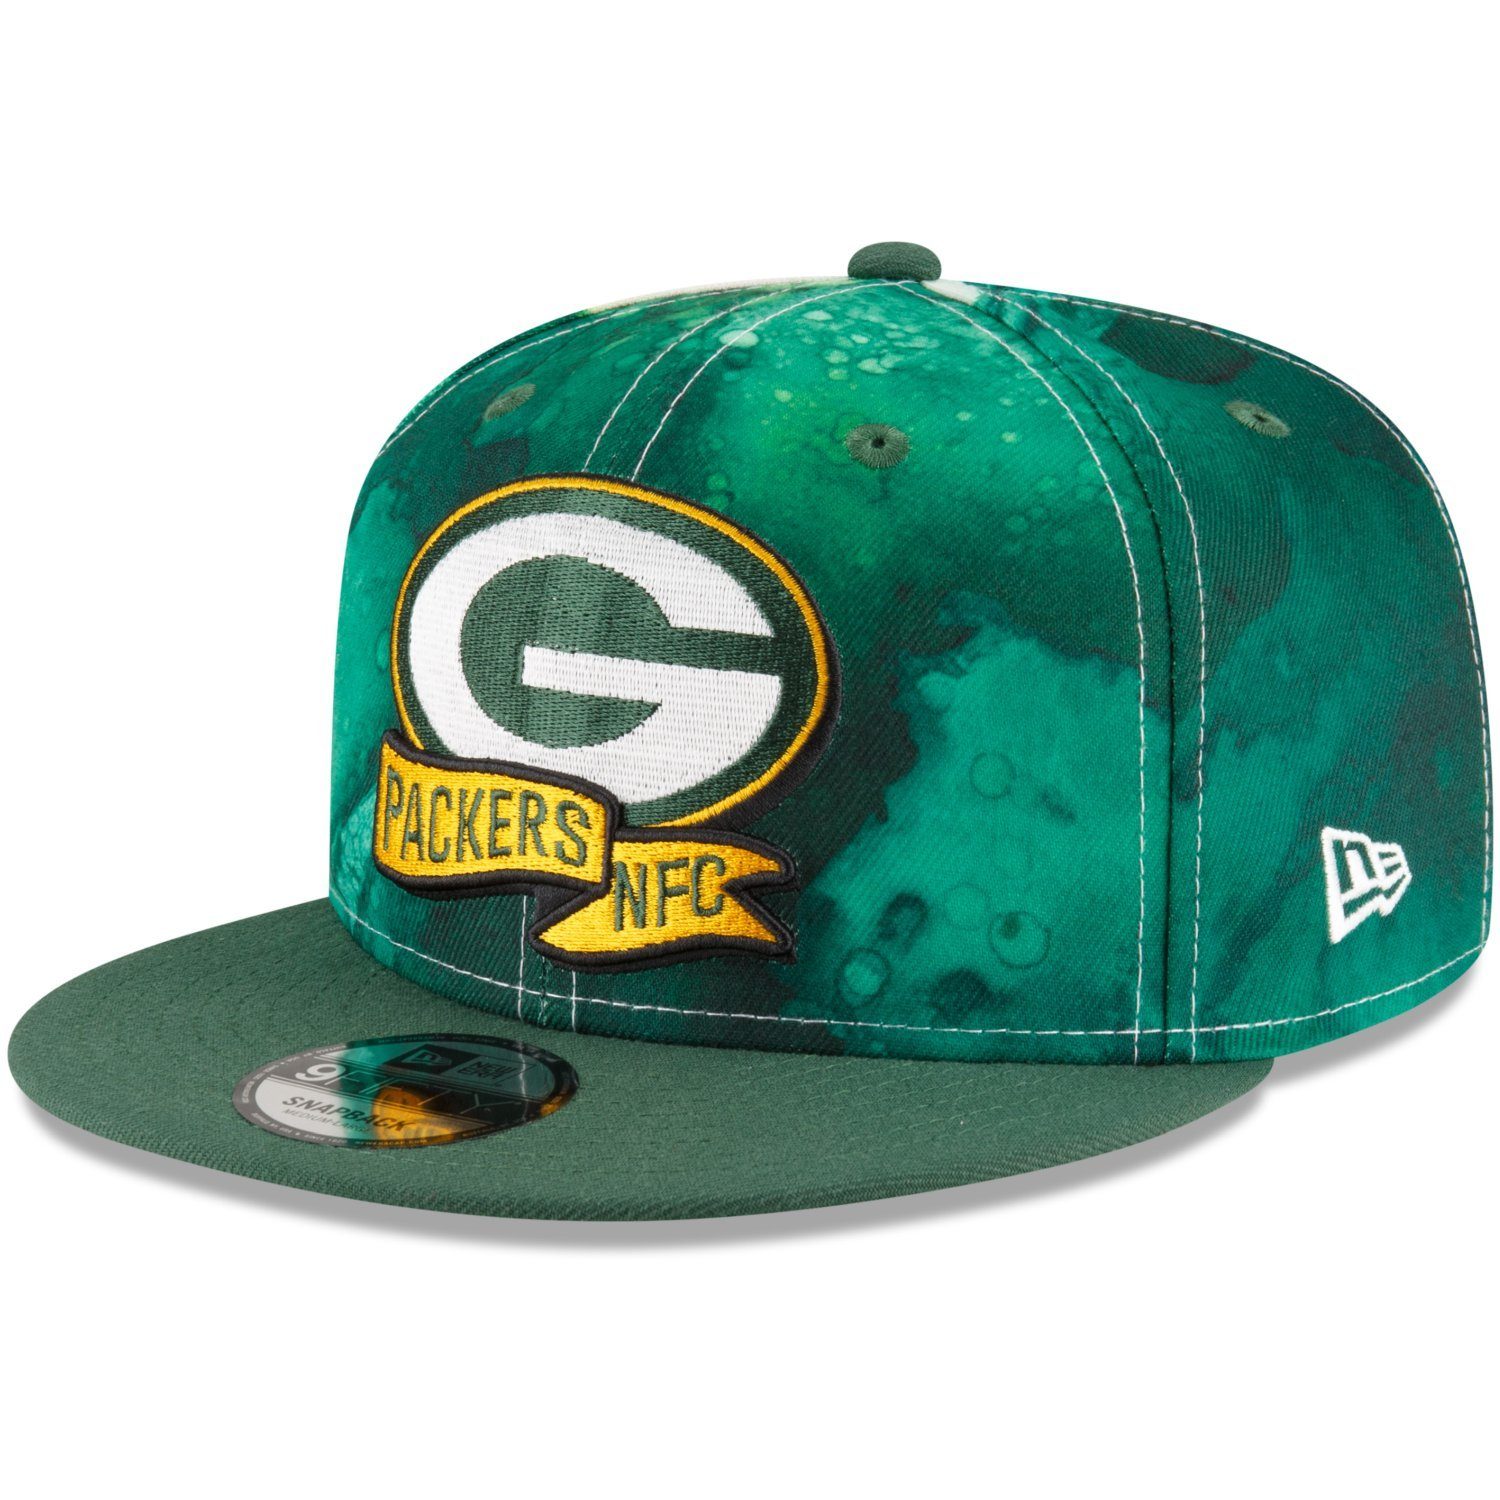 grün Era Bay Green New Sideline Snapback 9Fifty Packers Cap